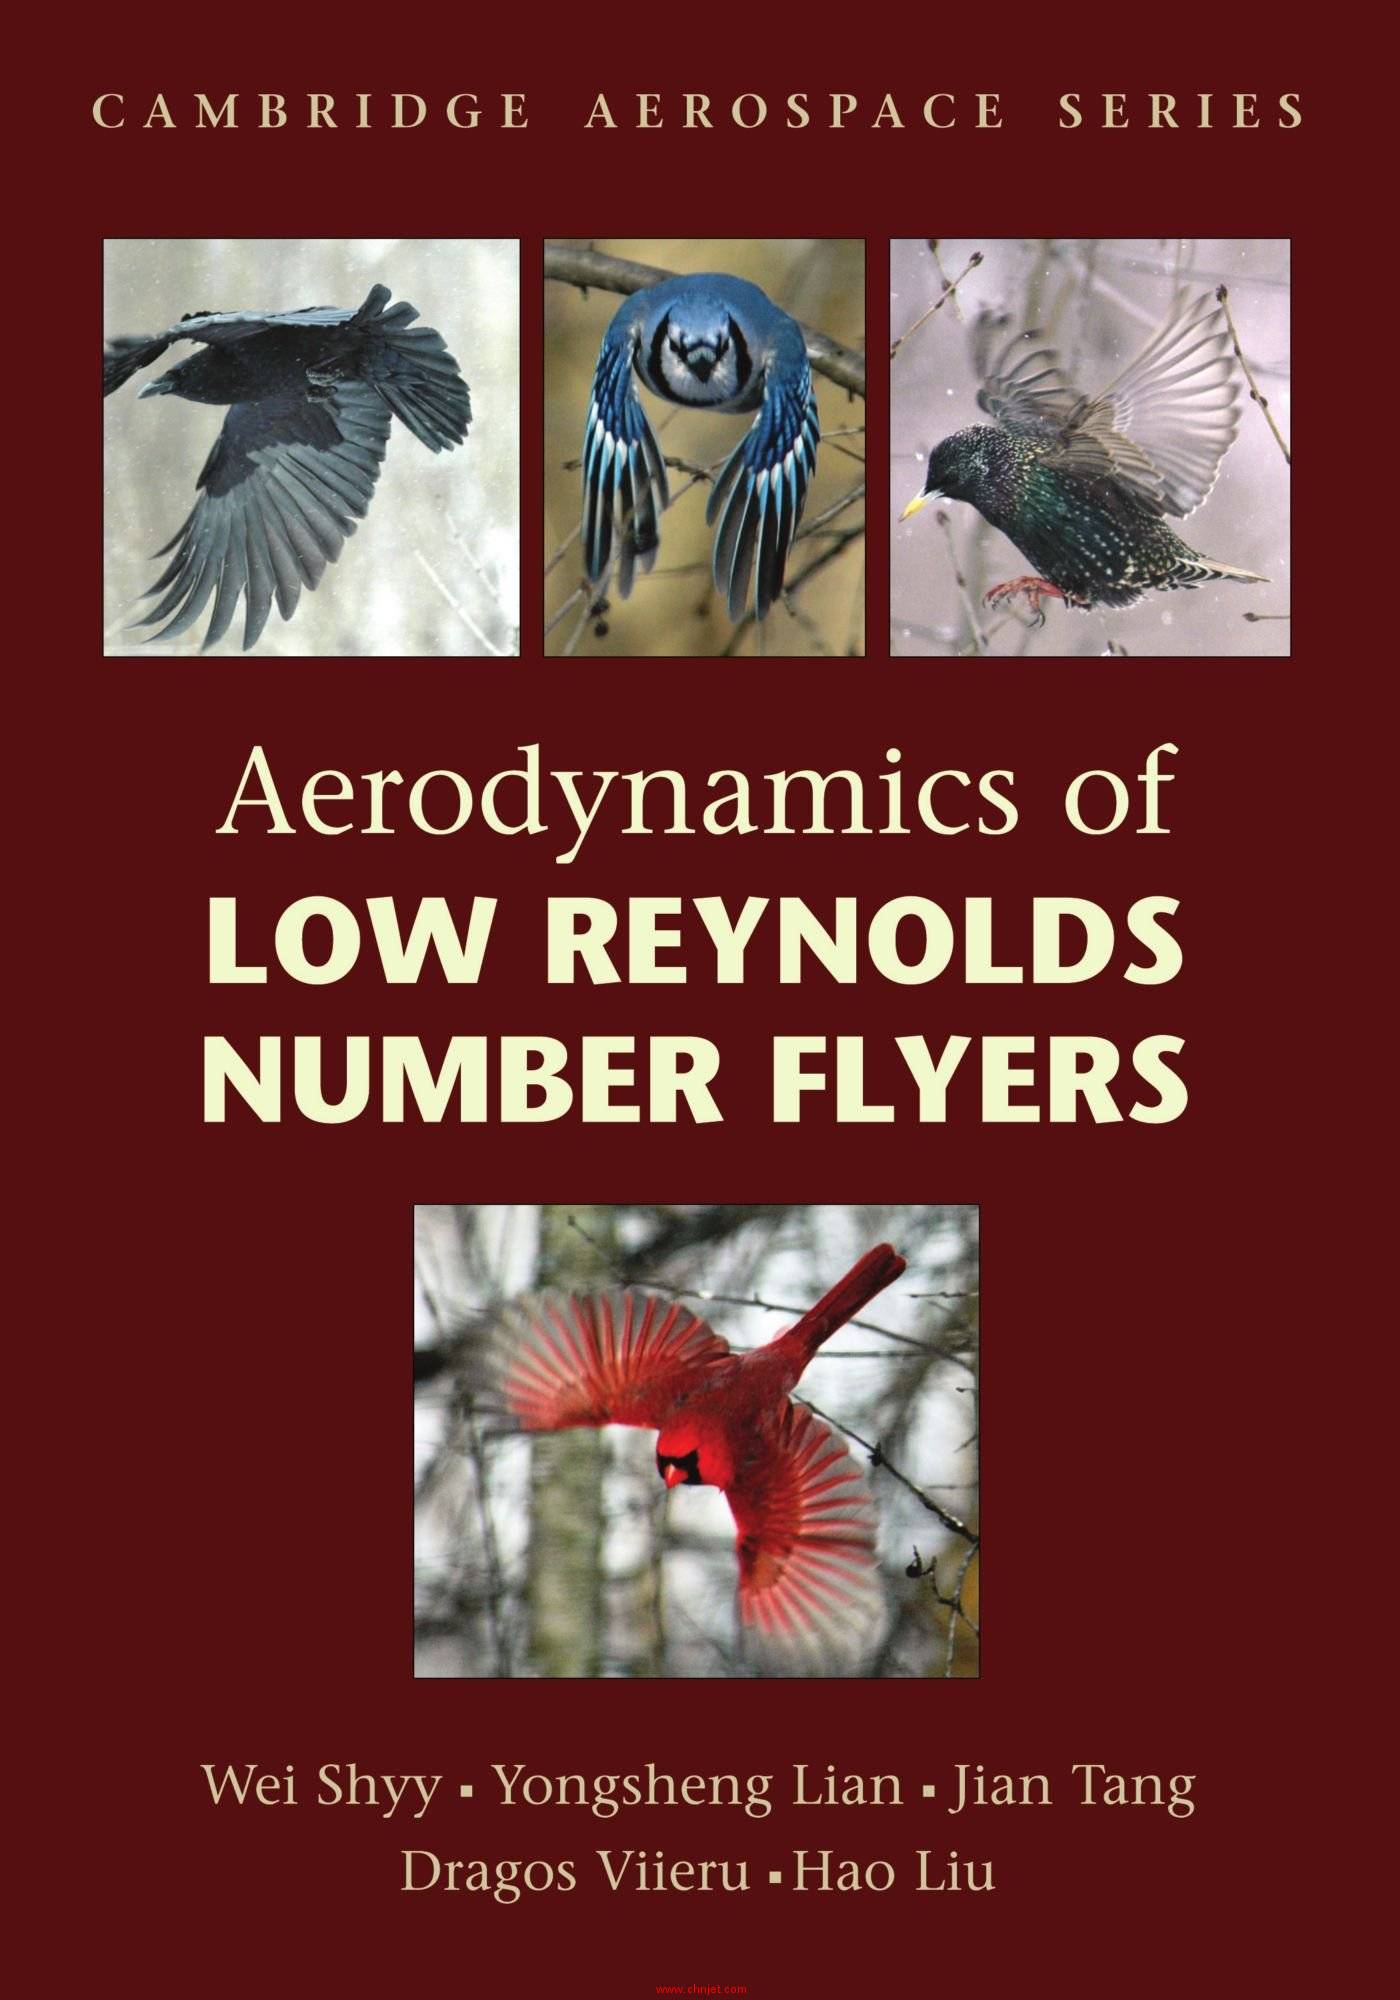 《Aerodynamics of Low Reynolds Number Flyers》